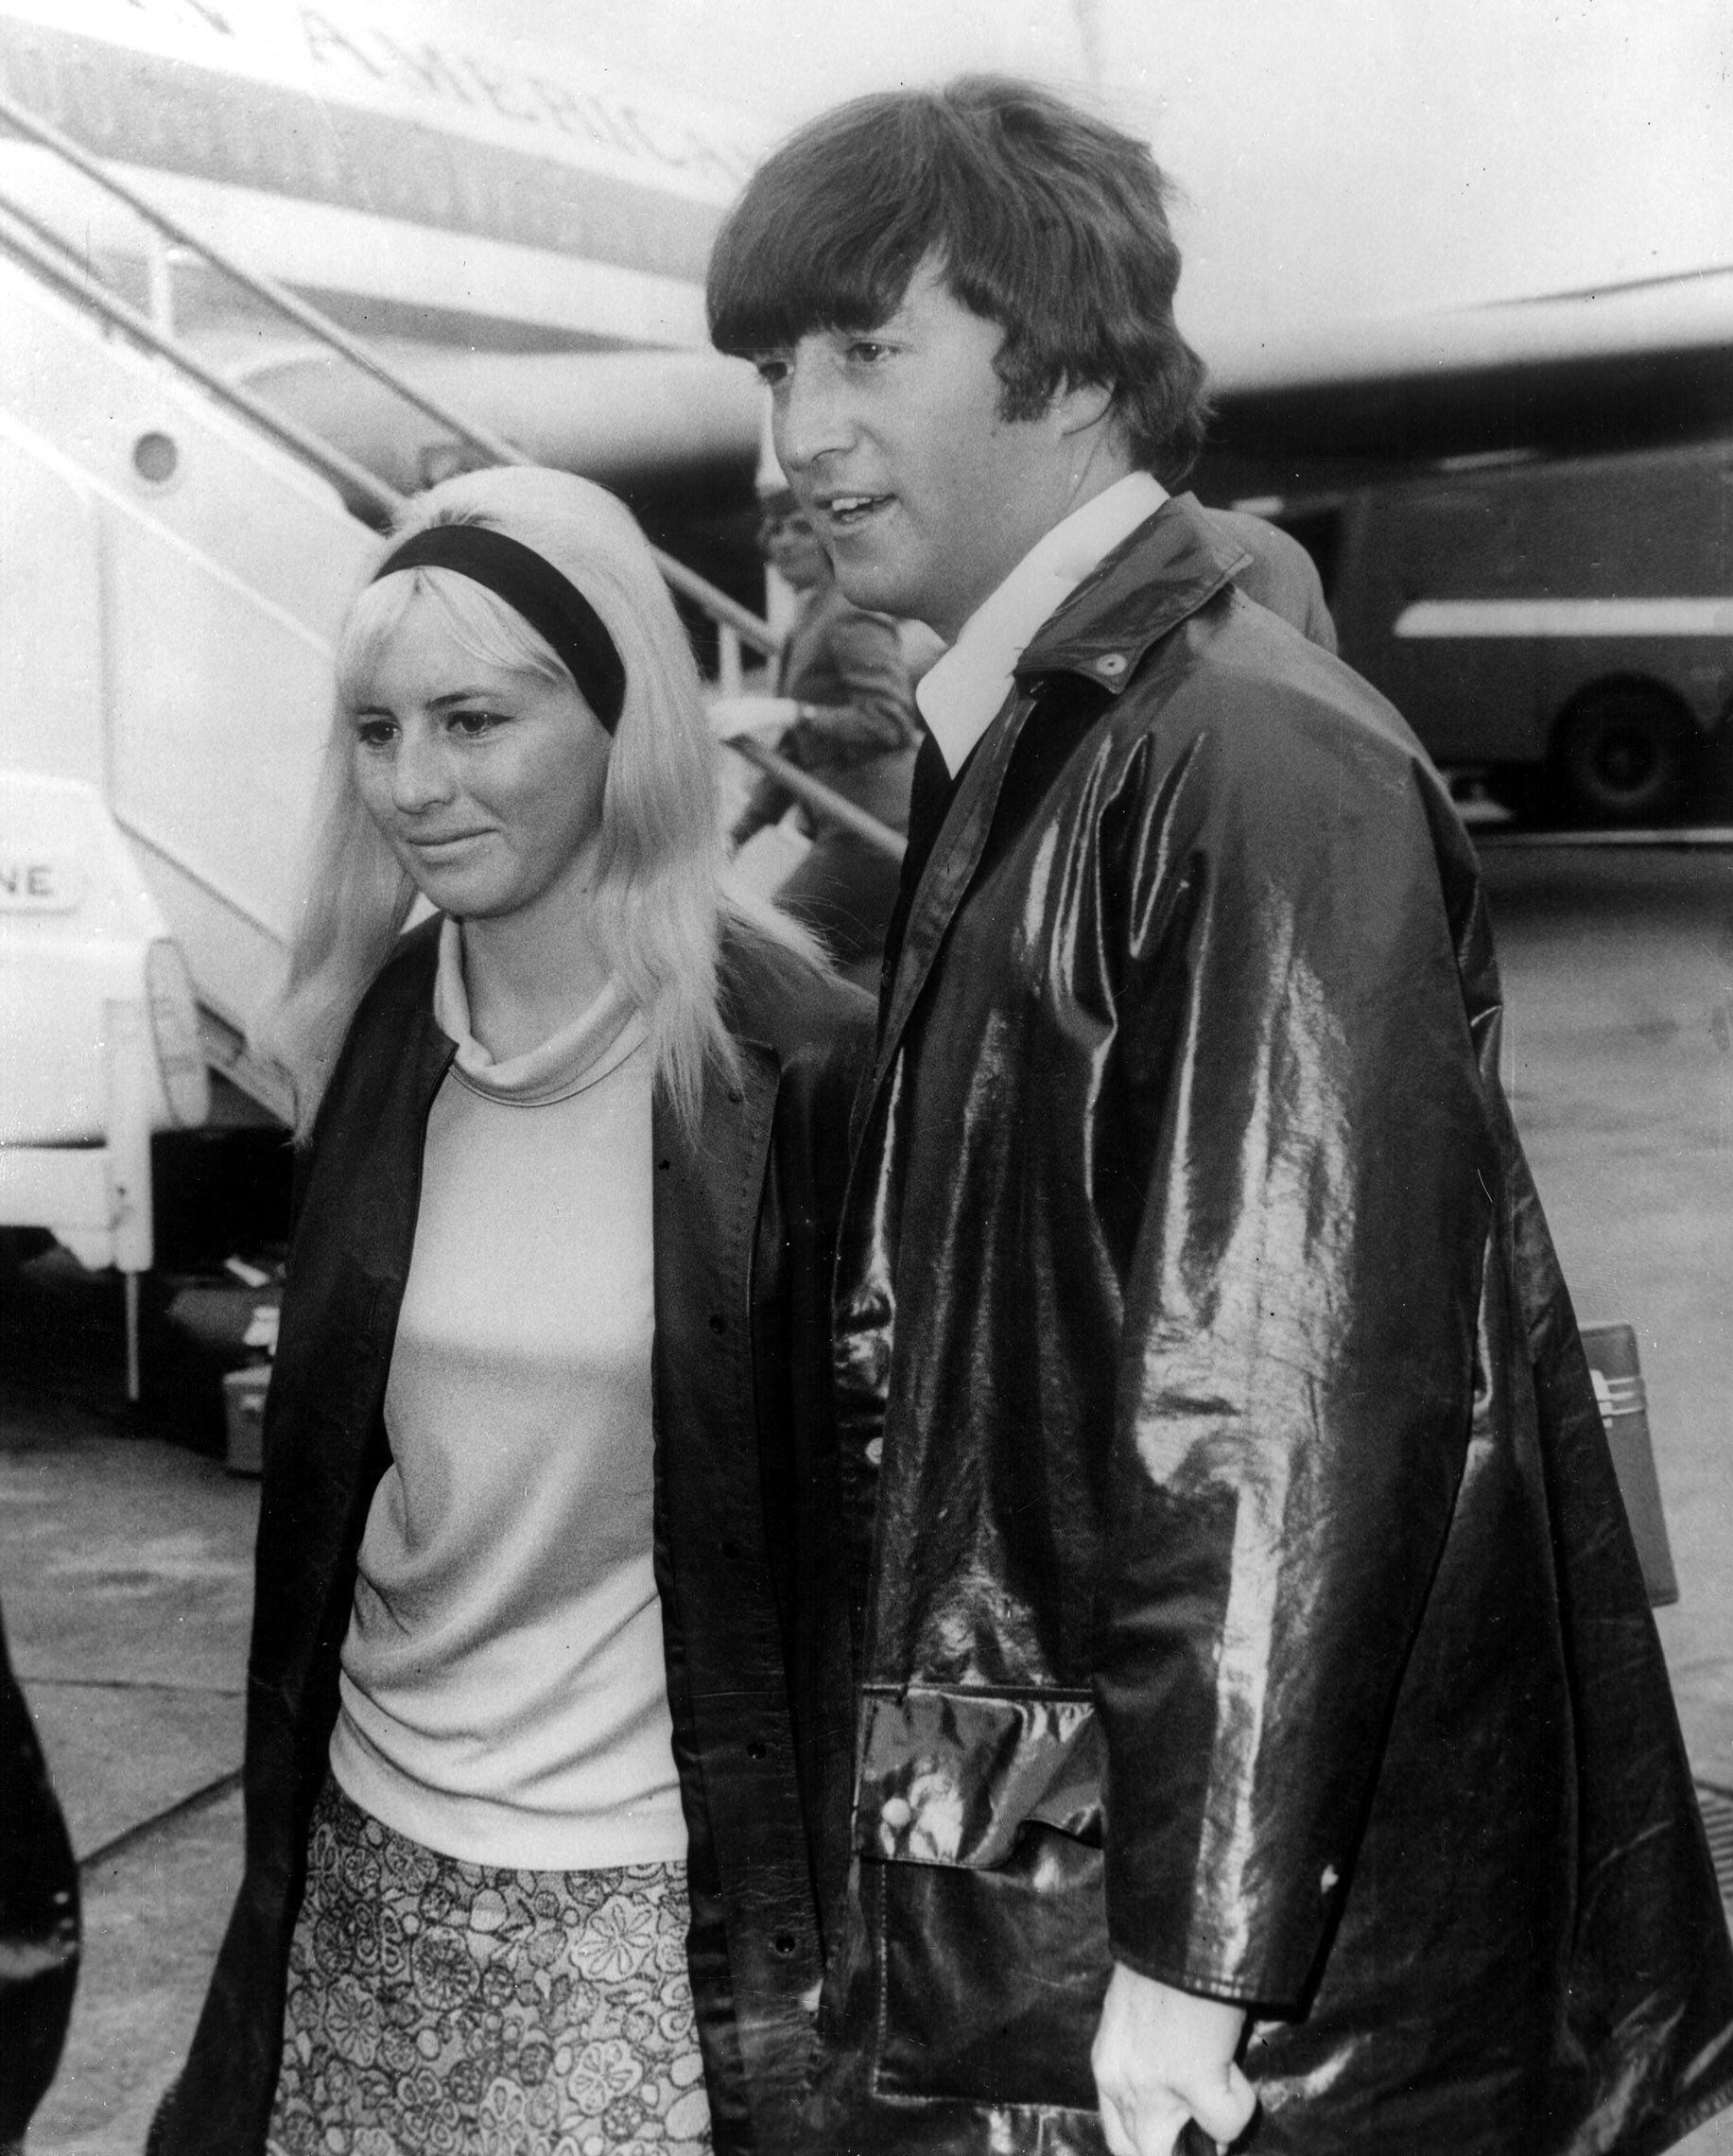 Cynthia Powell e John Lennon chegam ao aeroporto de Londres em 1964.